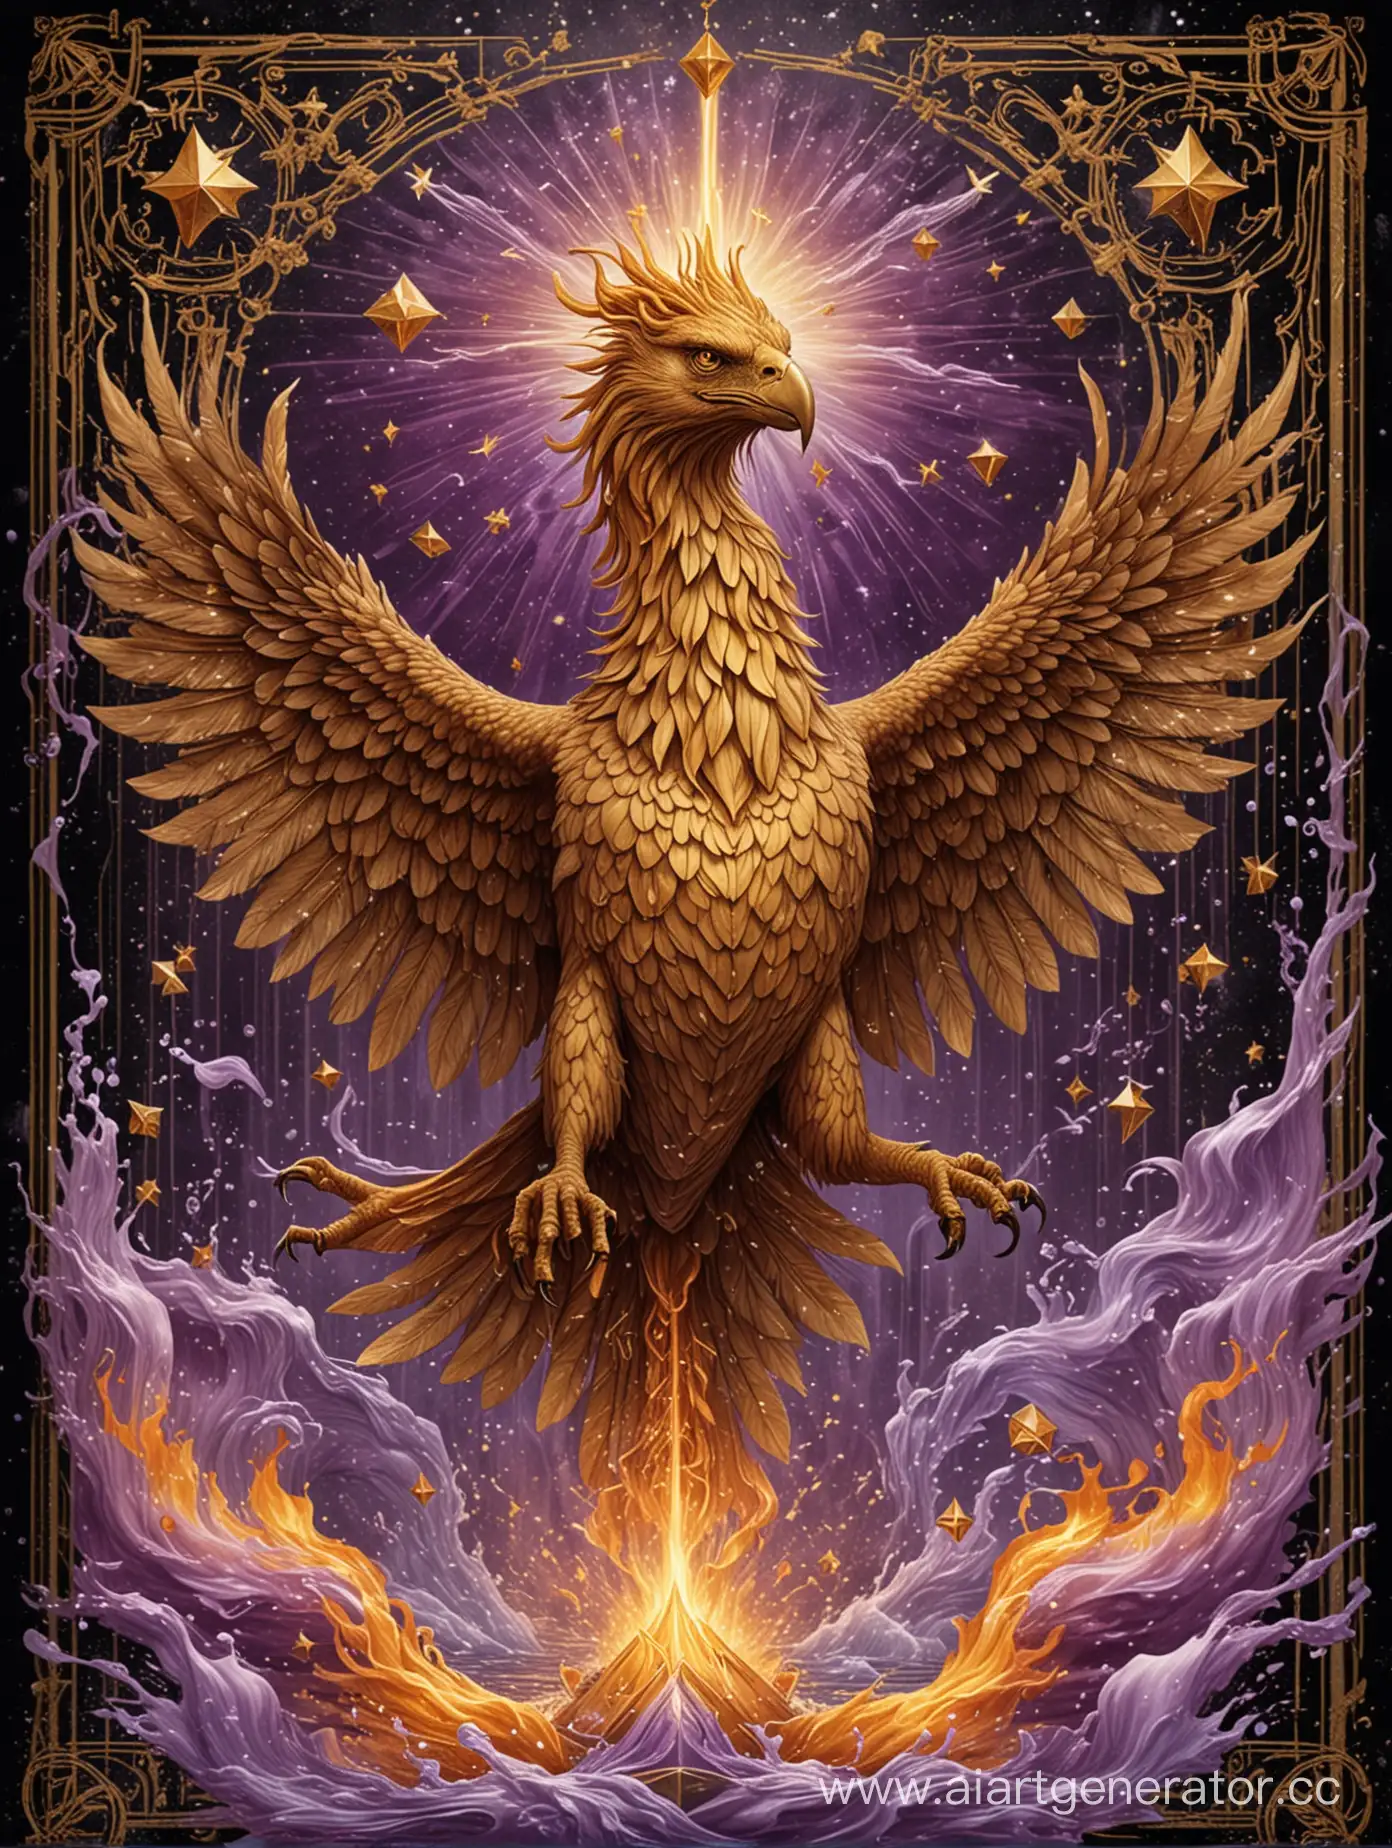 Futuristic-Tarot-Card-Shirt-Golden-Griffin-Birds-in-Elemental-Struggle